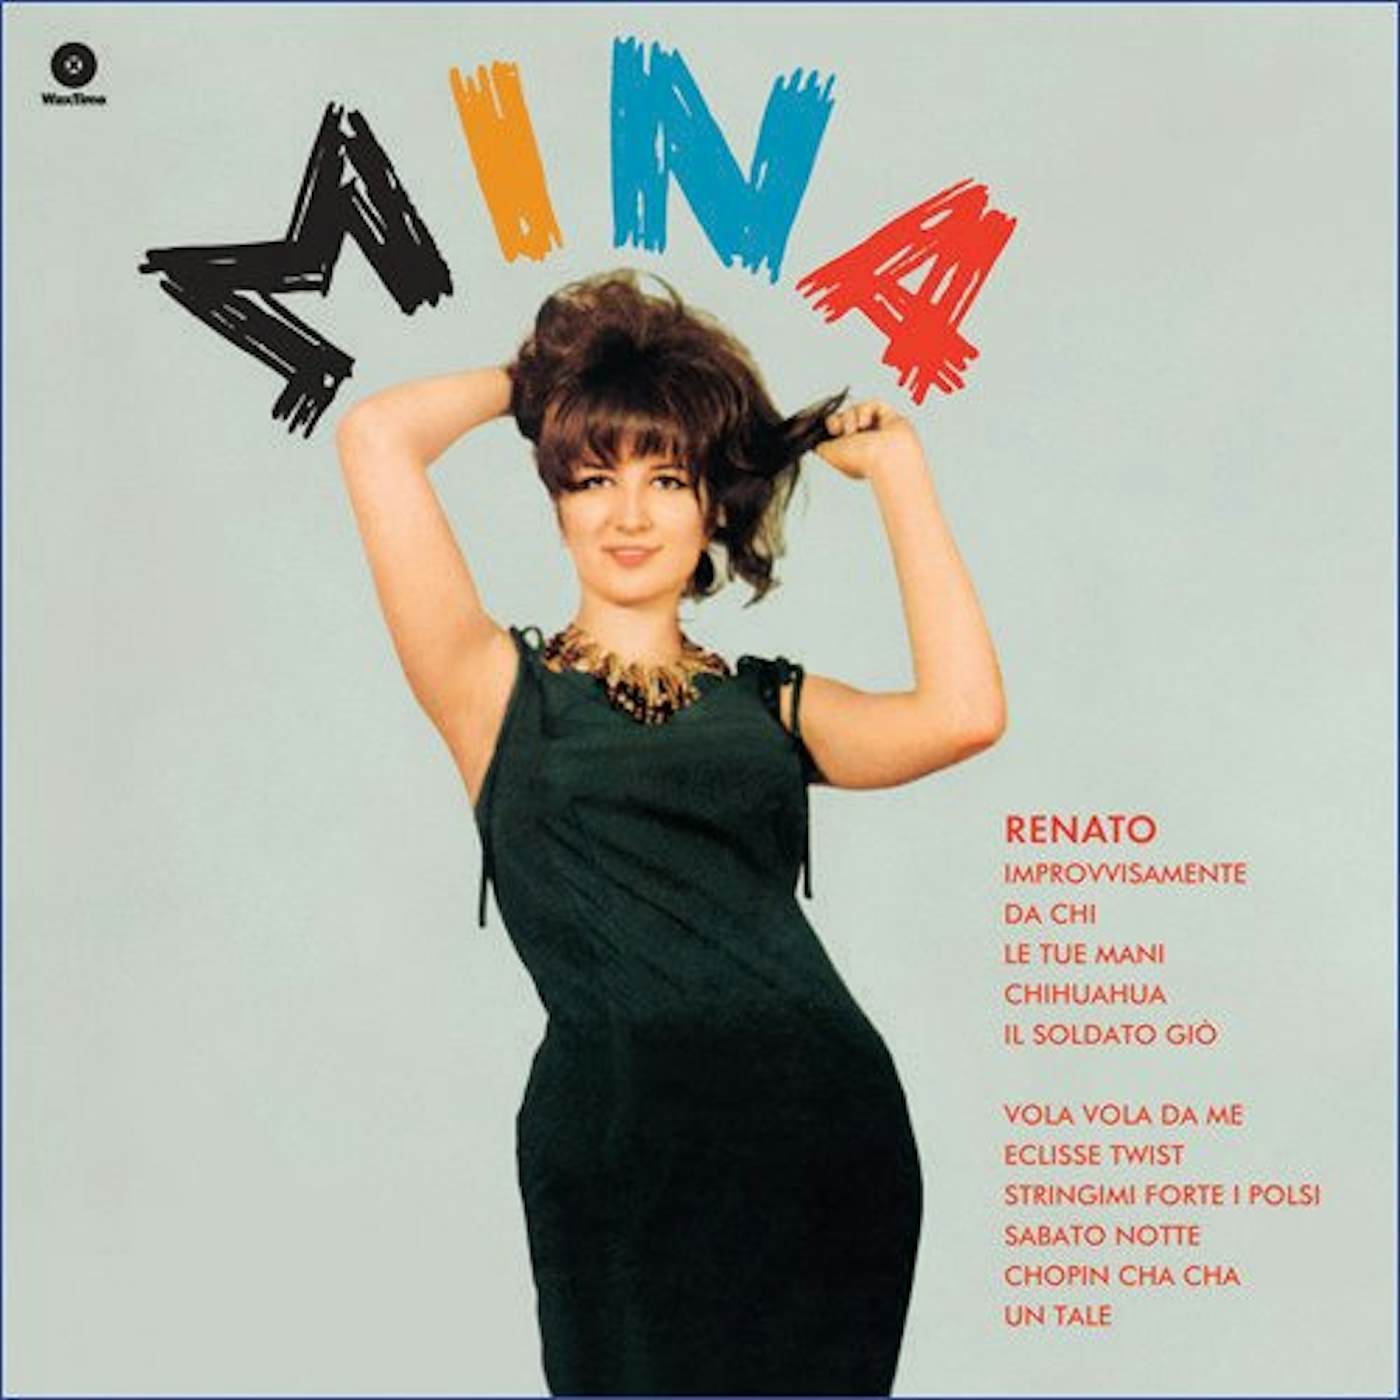 Mina RENATO + 2 BONUS TRACKS (BONUS TRACKS) Vinyl Record - Limited Edition, 180 Gram Pressing